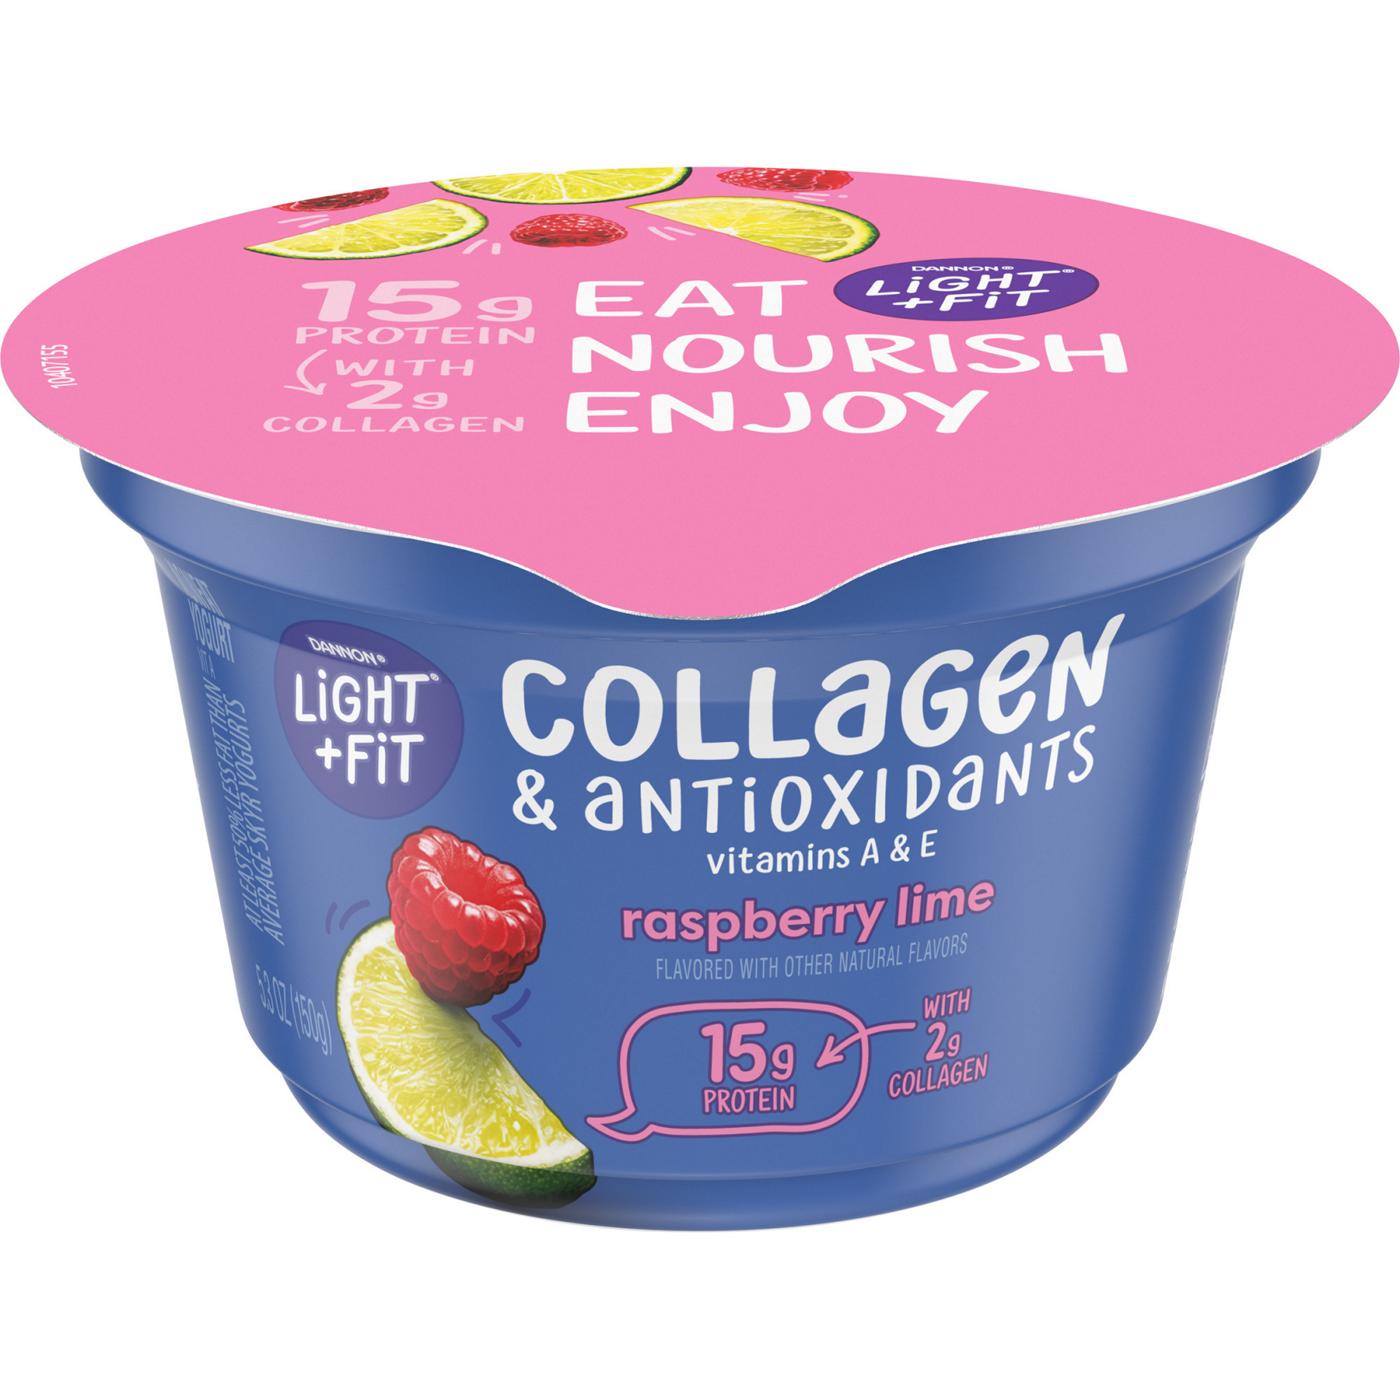 Dannon Light & Fit Non-Fat Raspberry Lime Yogurt With Collagen & Antioxidants; image 1 of 8